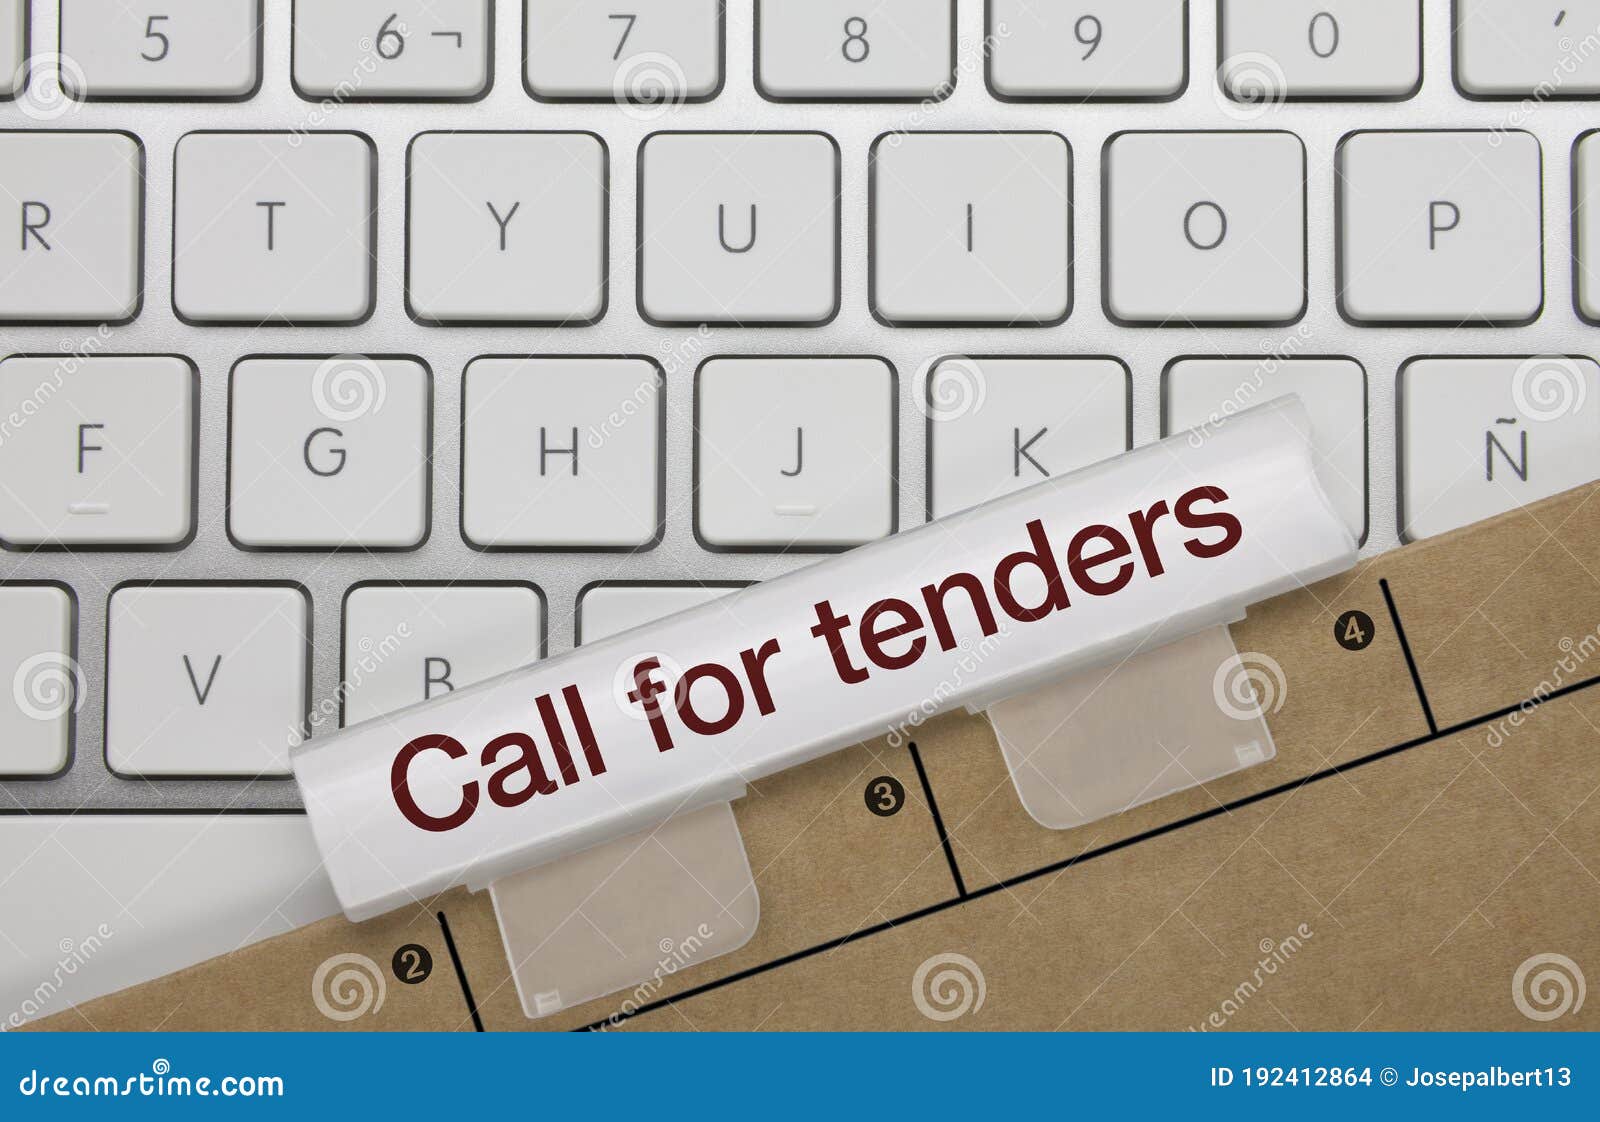 call for tenders - inscription on white keyboard key